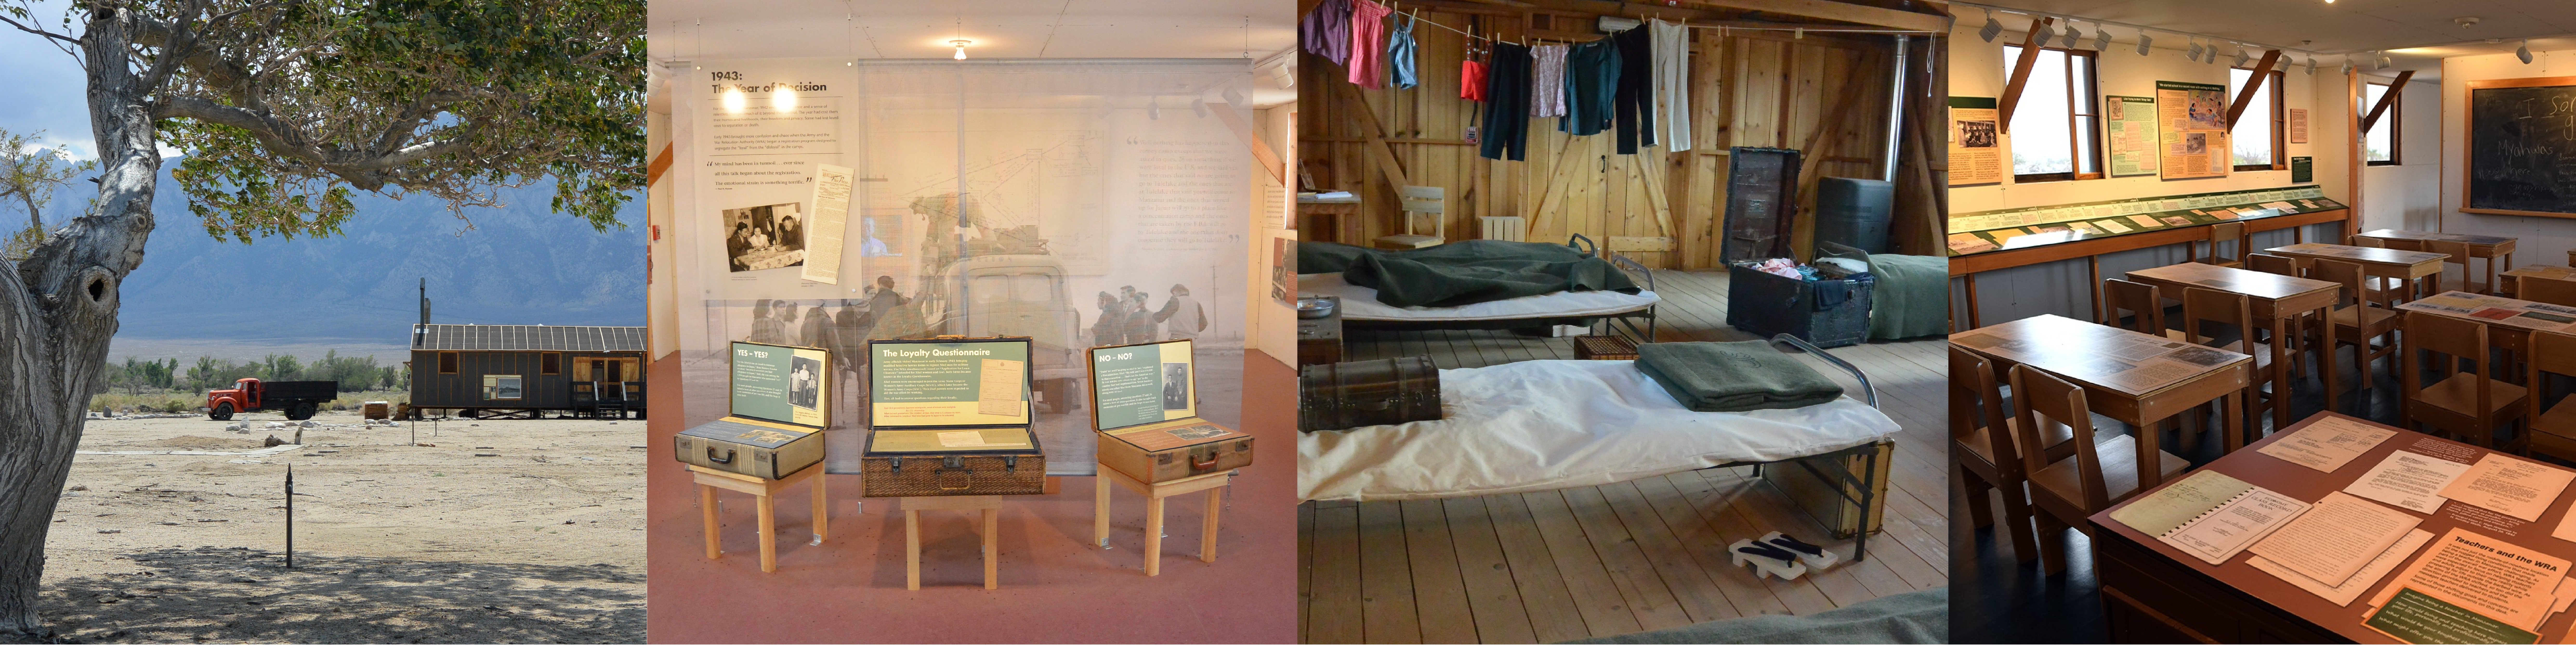 Visitor Center & Block 14 Exhibits - Manzanar National Historic Site (U.S. National Park Service)